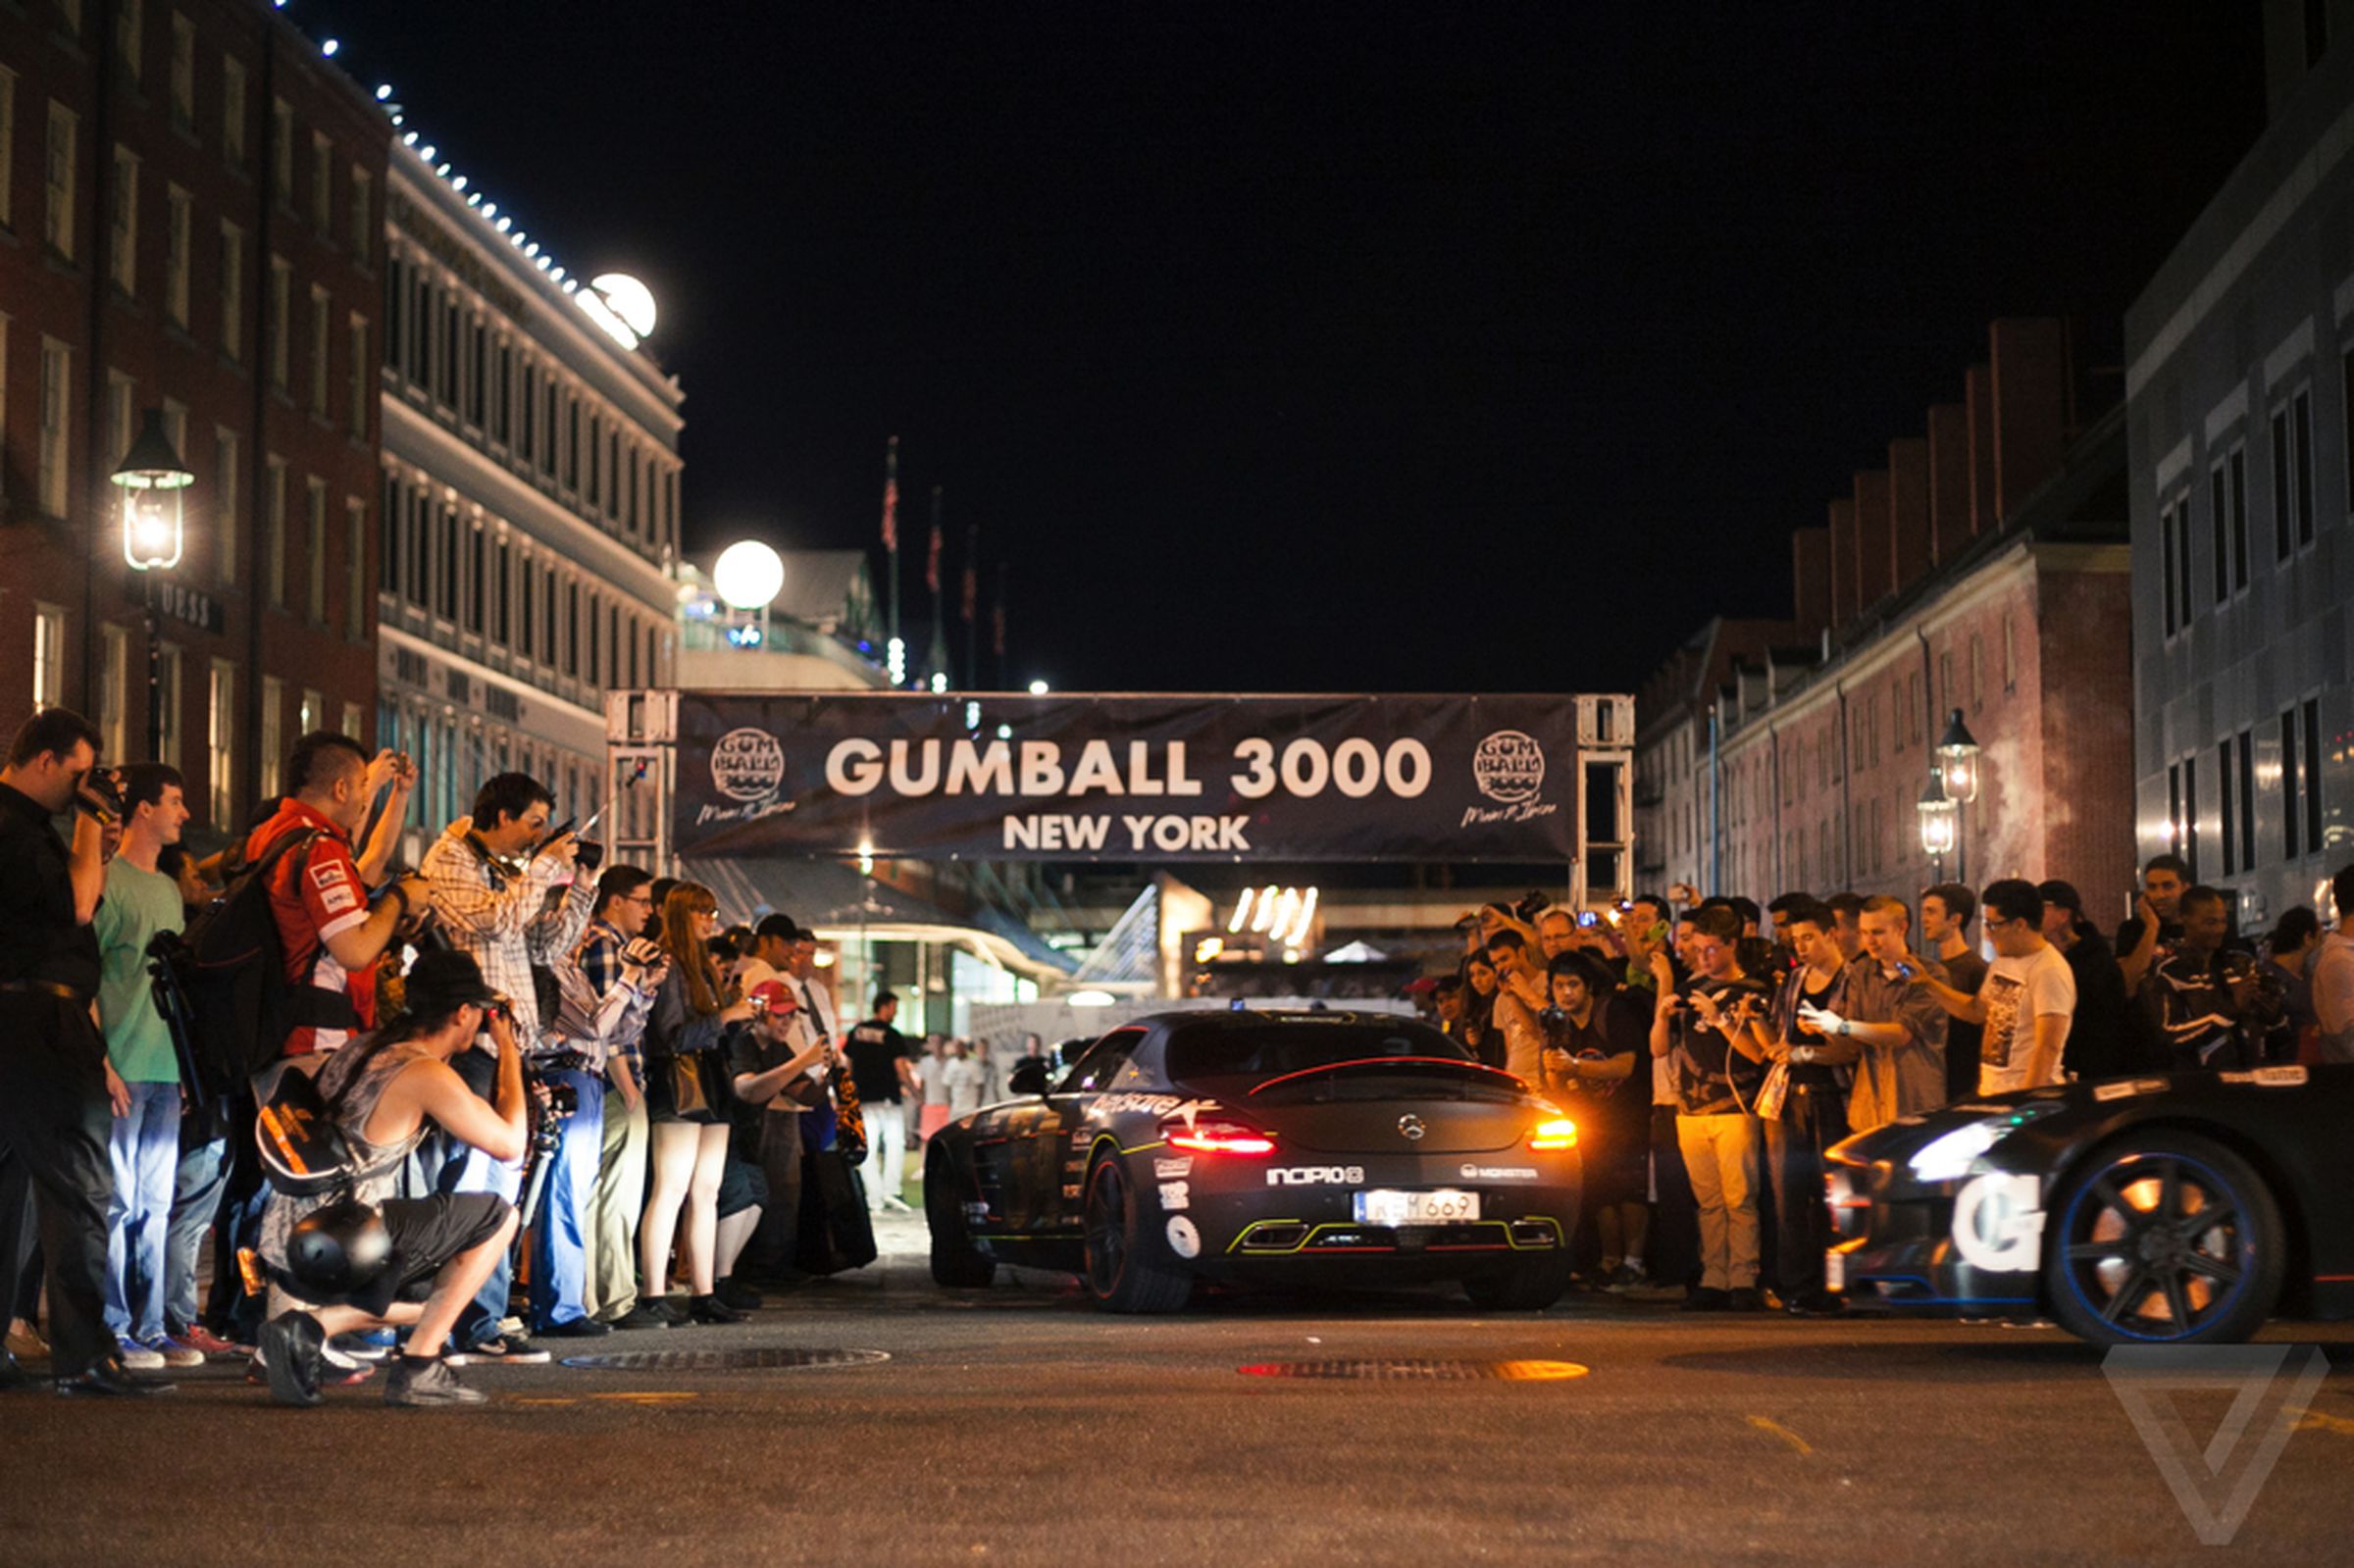 Gumball 3000 in New York City